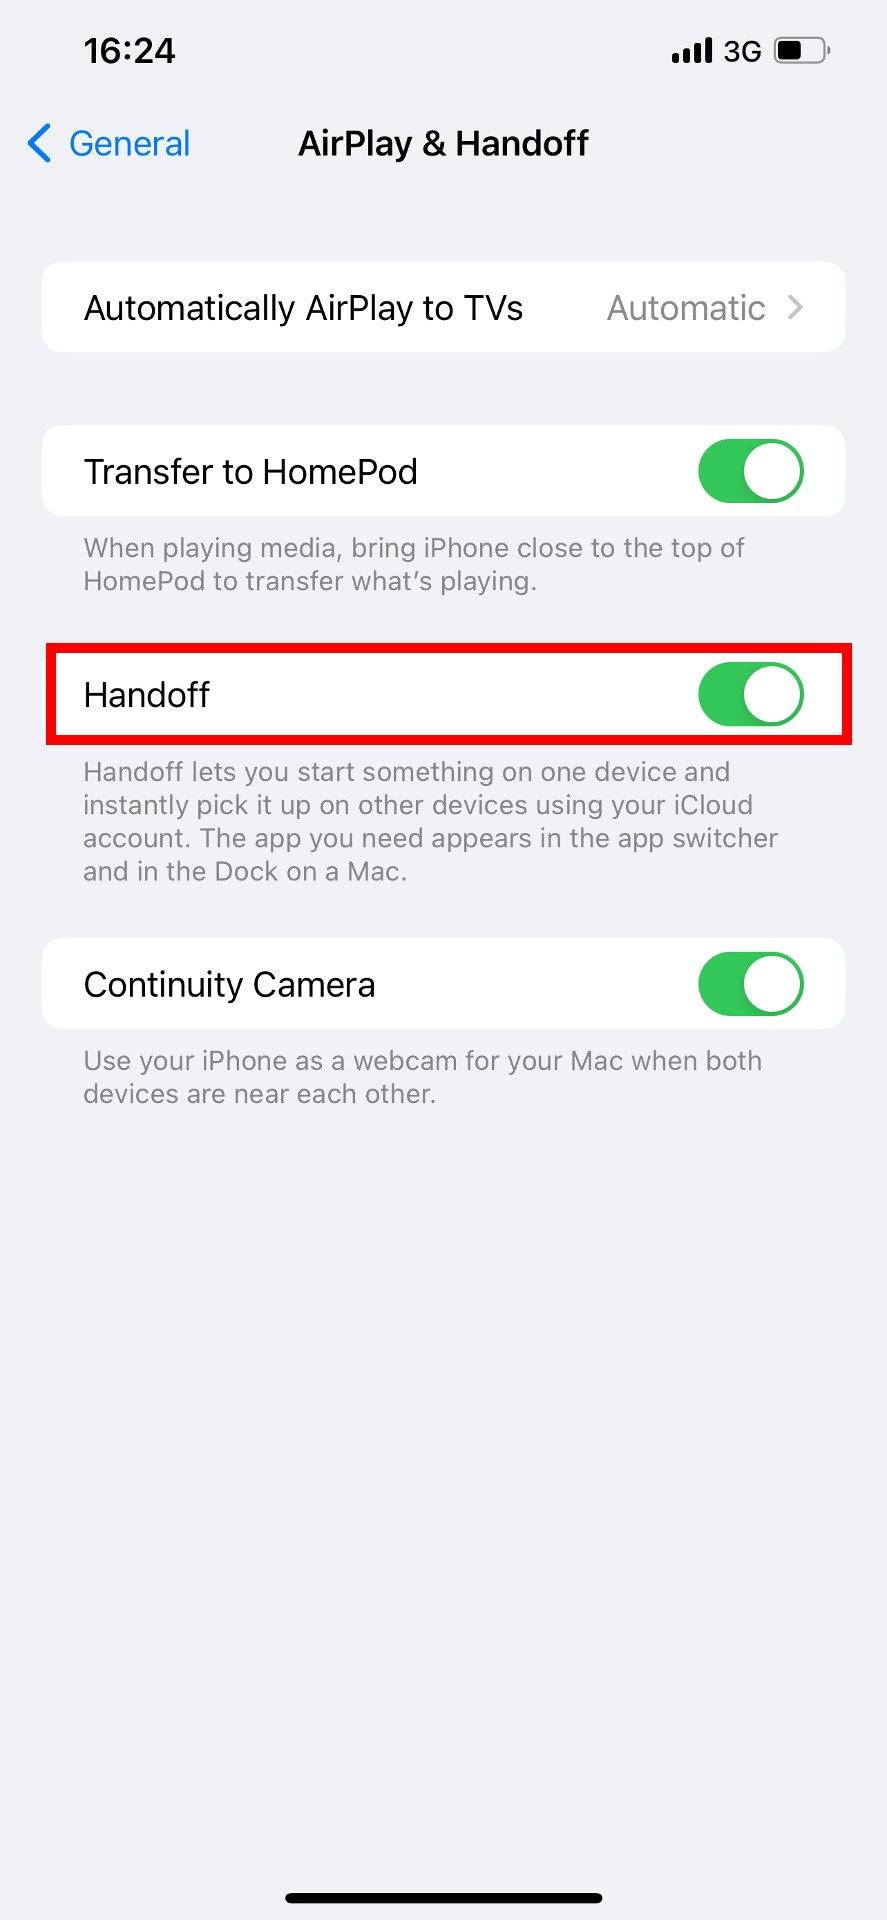 iOS AirPlay & Handoff settings with "Handoff" highlighted